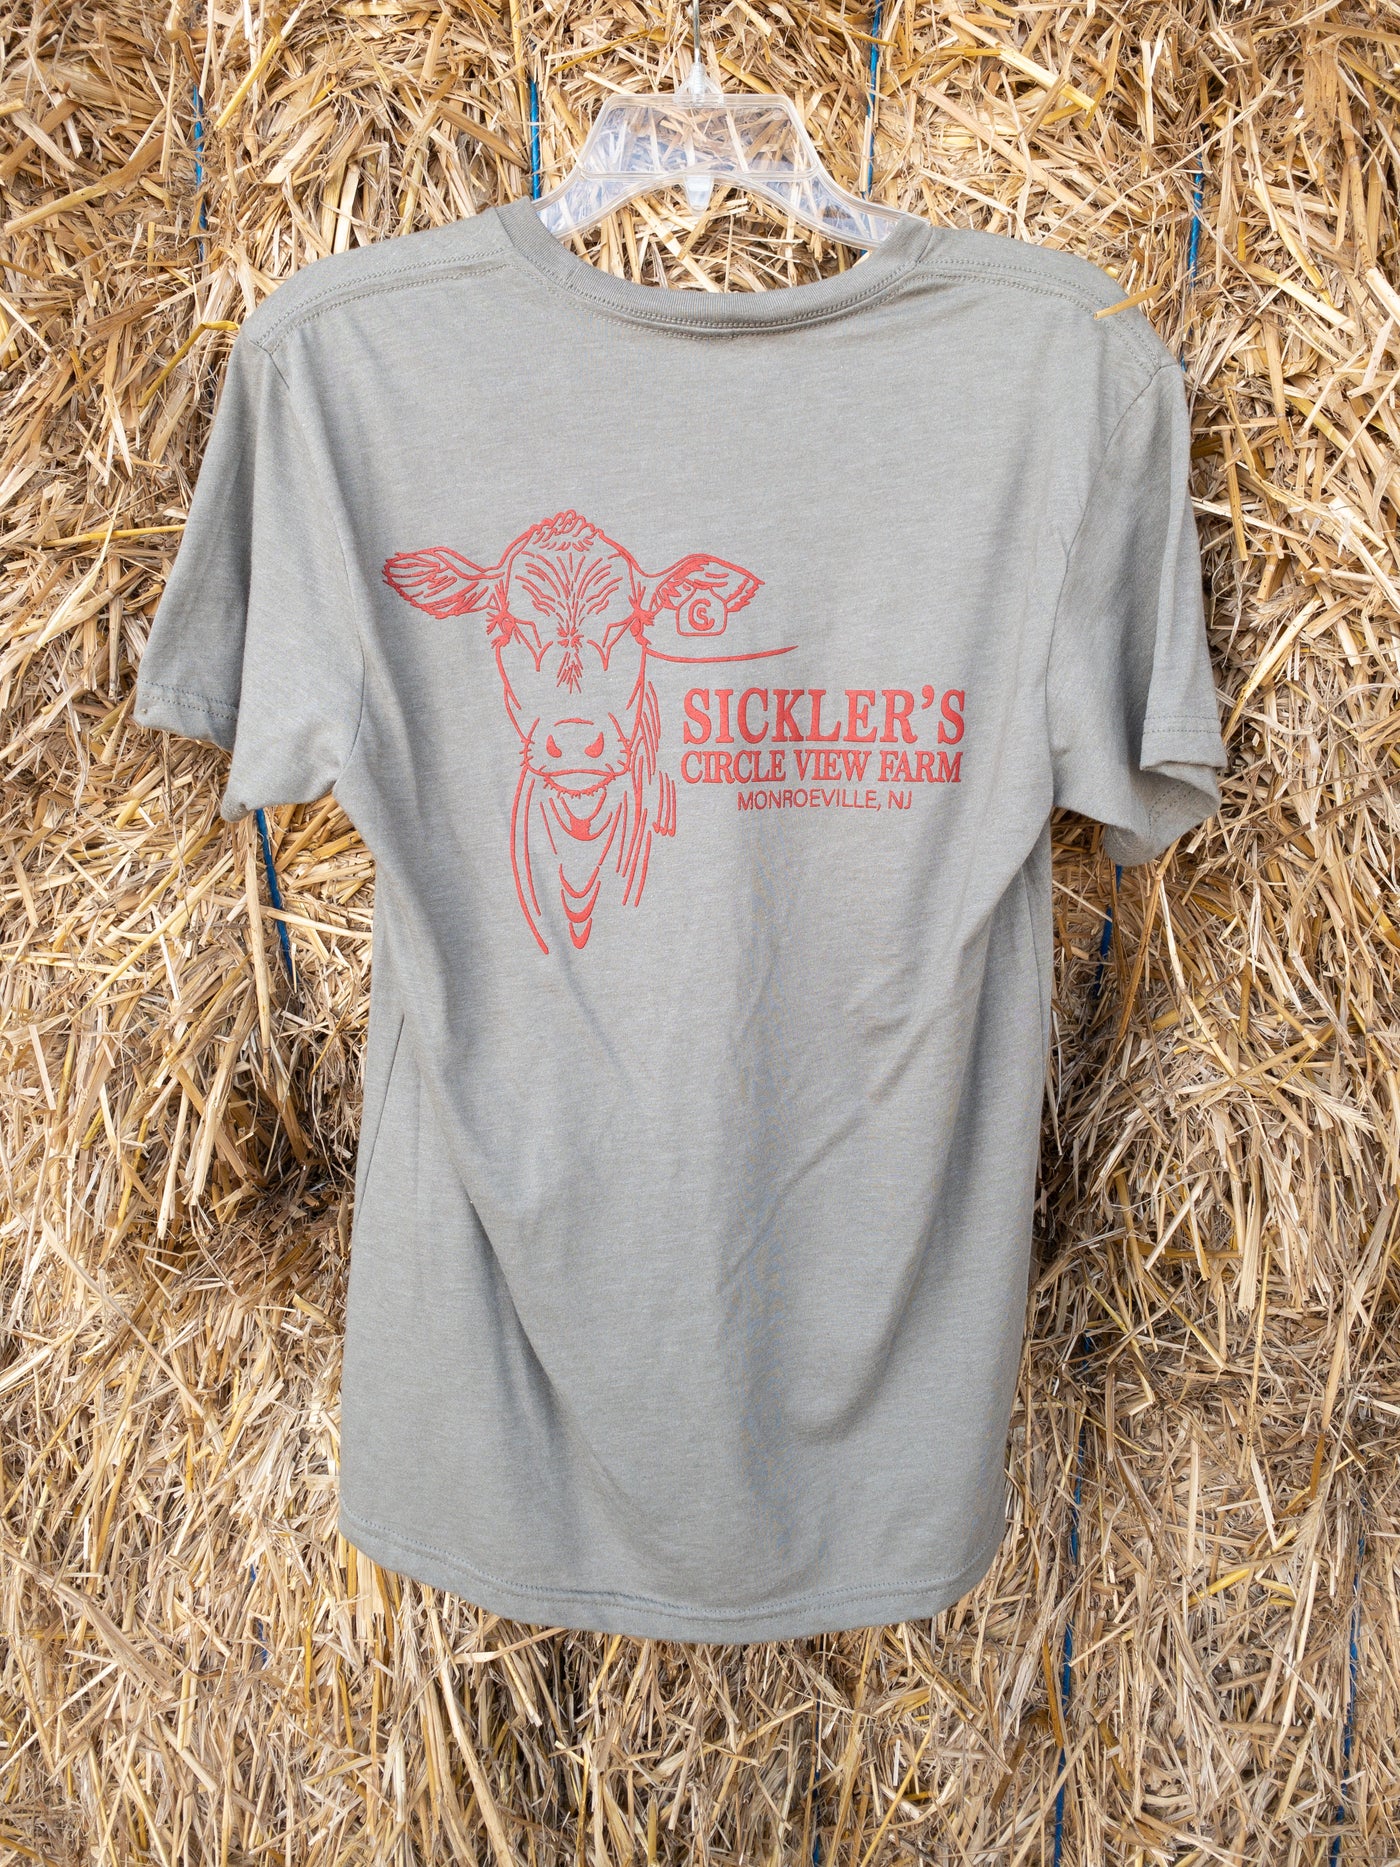 Cow Logo Short Sleeve T-Shirt